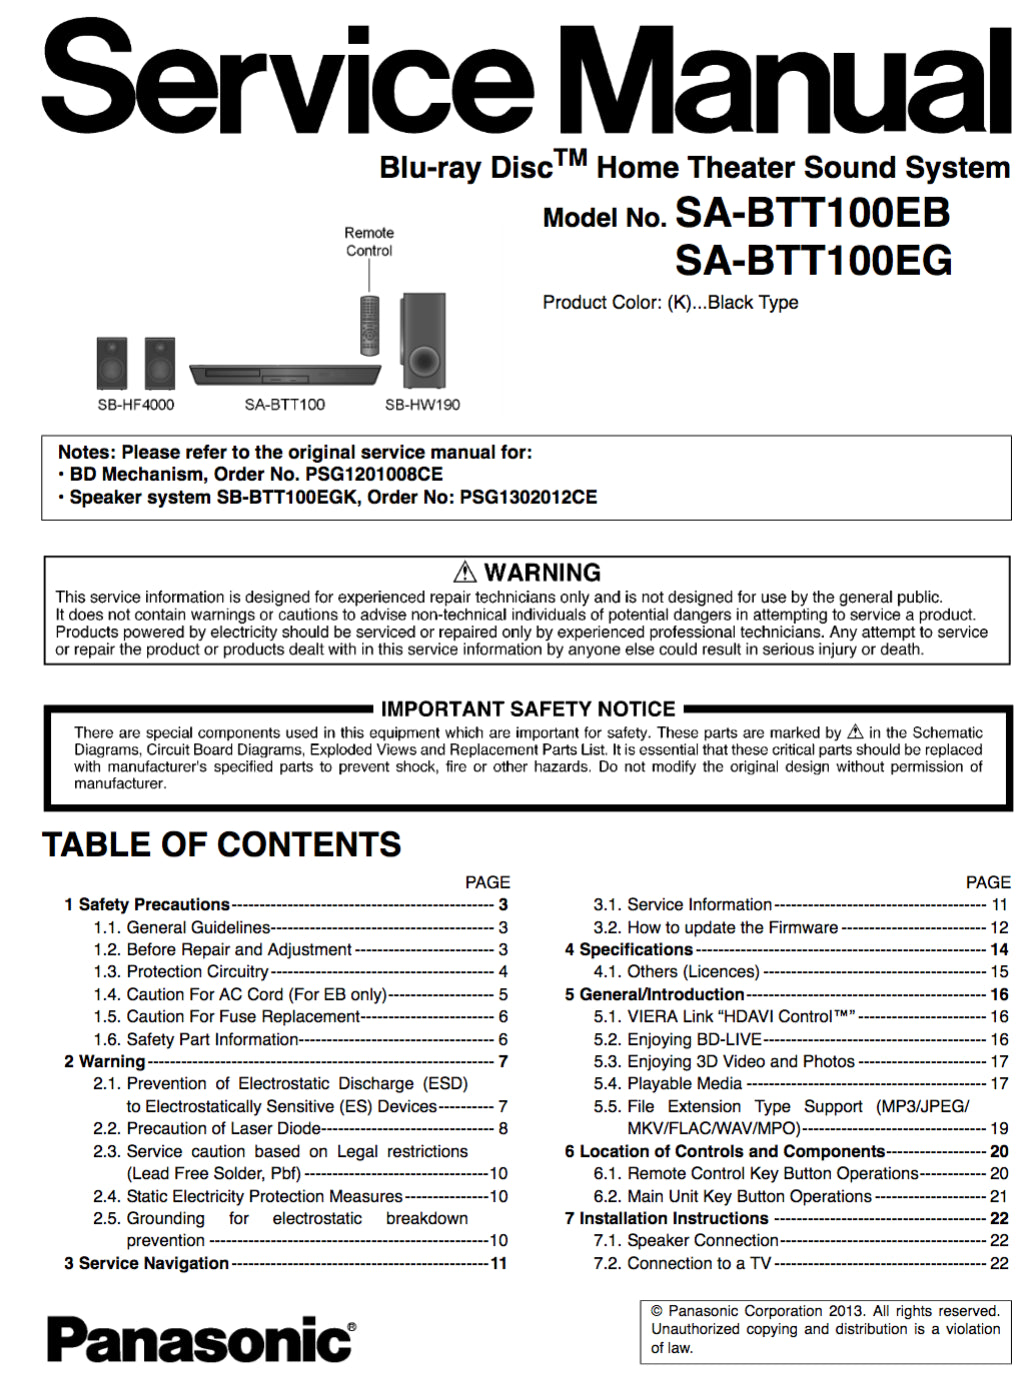 Panasonic SA-BTT100 Service Manual